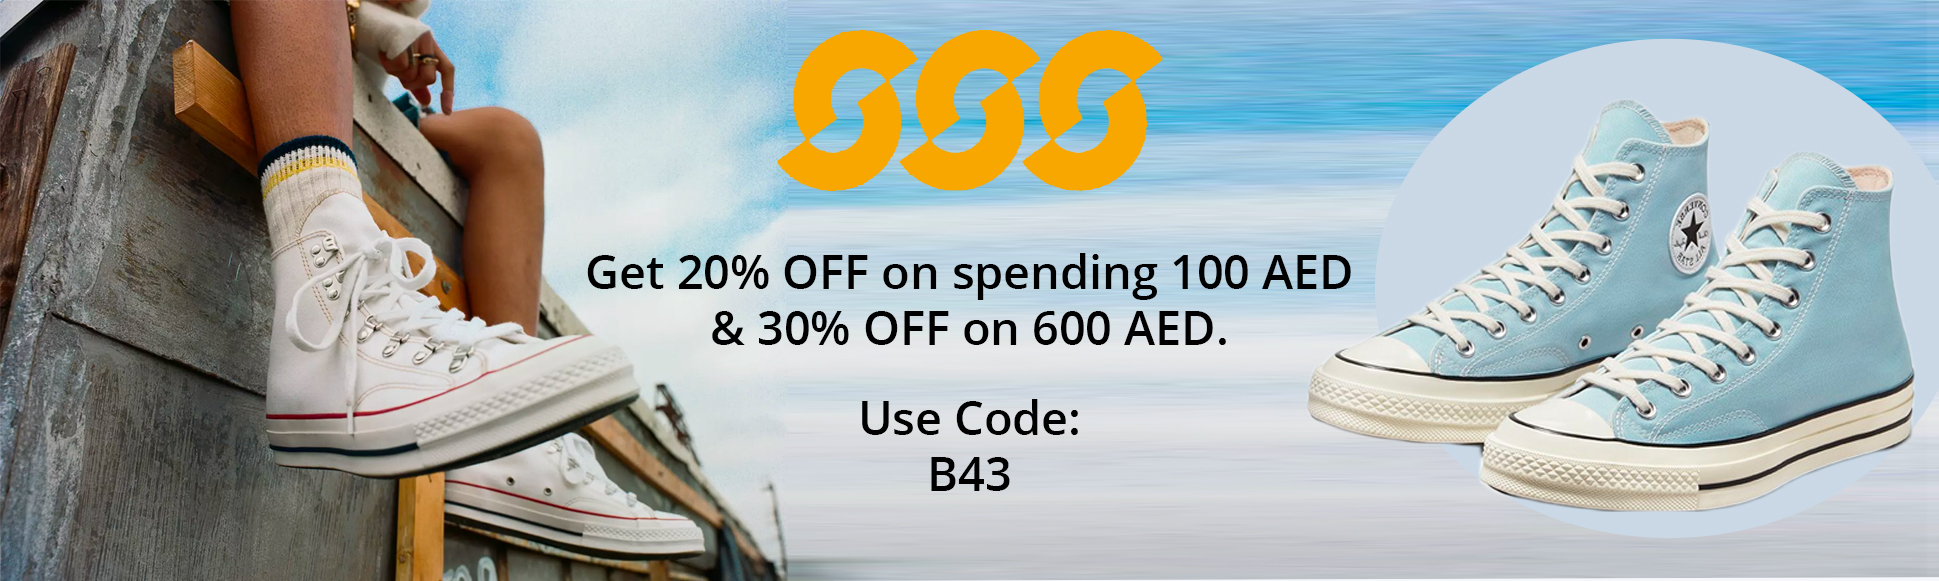 Sun & Sand Sports Promo Code UAE - Get 30% OFF